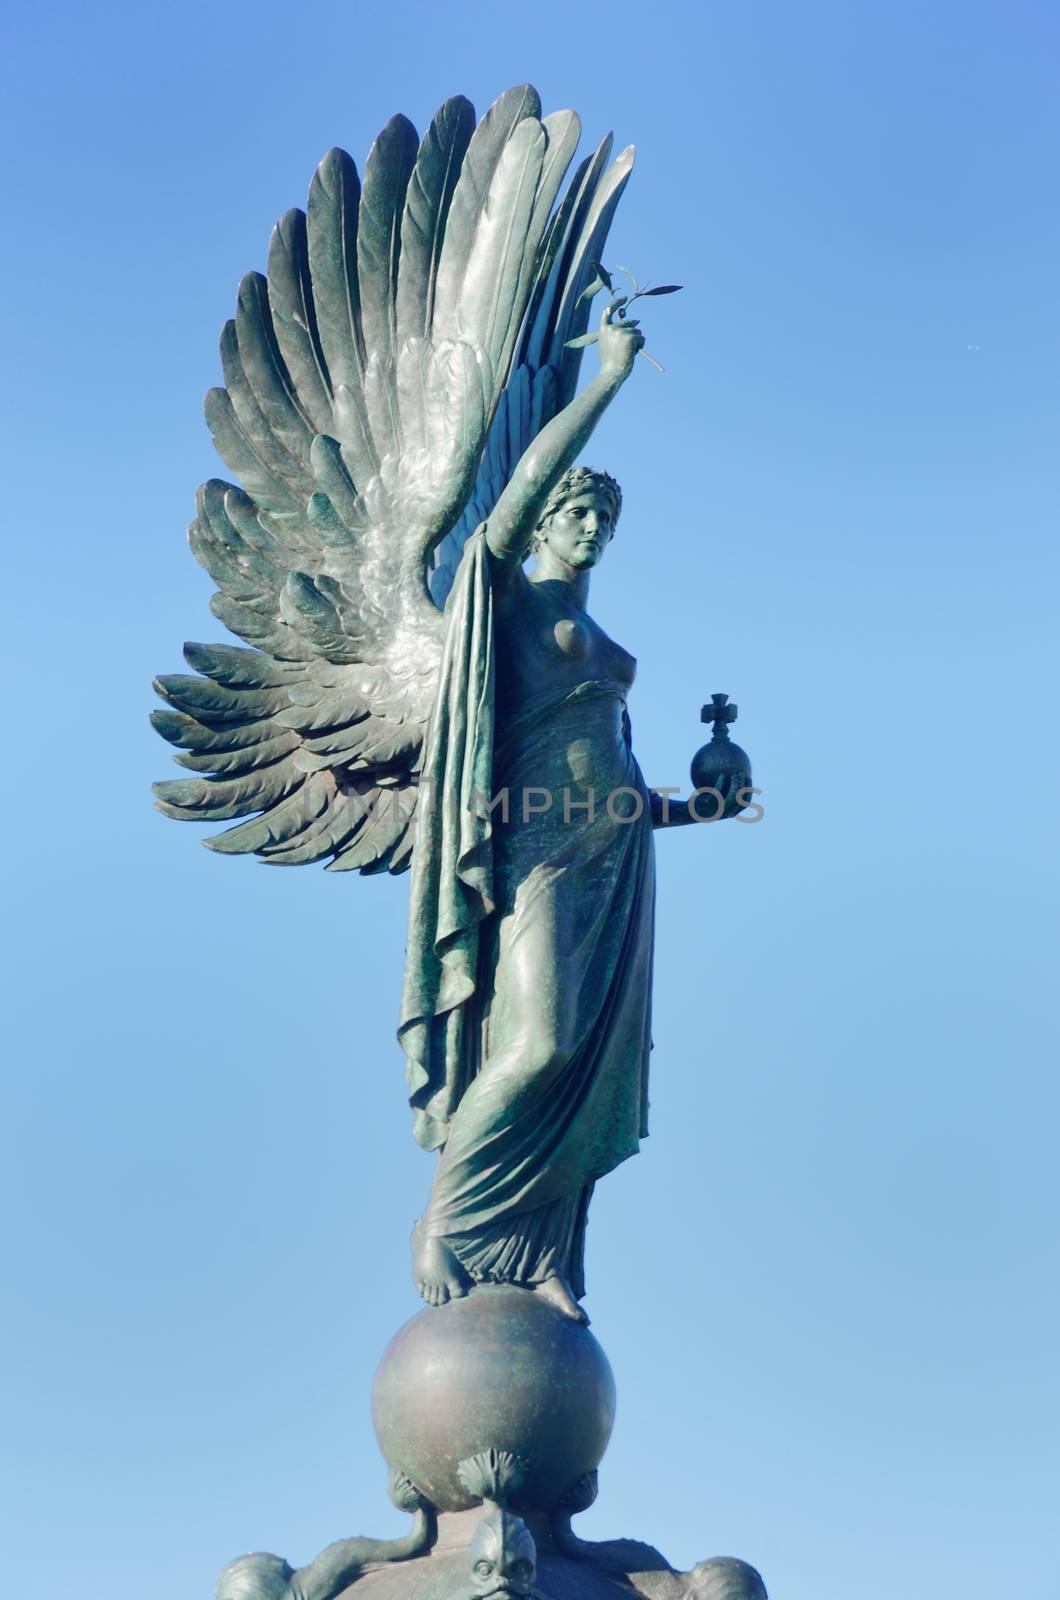 War memorial statue with wings